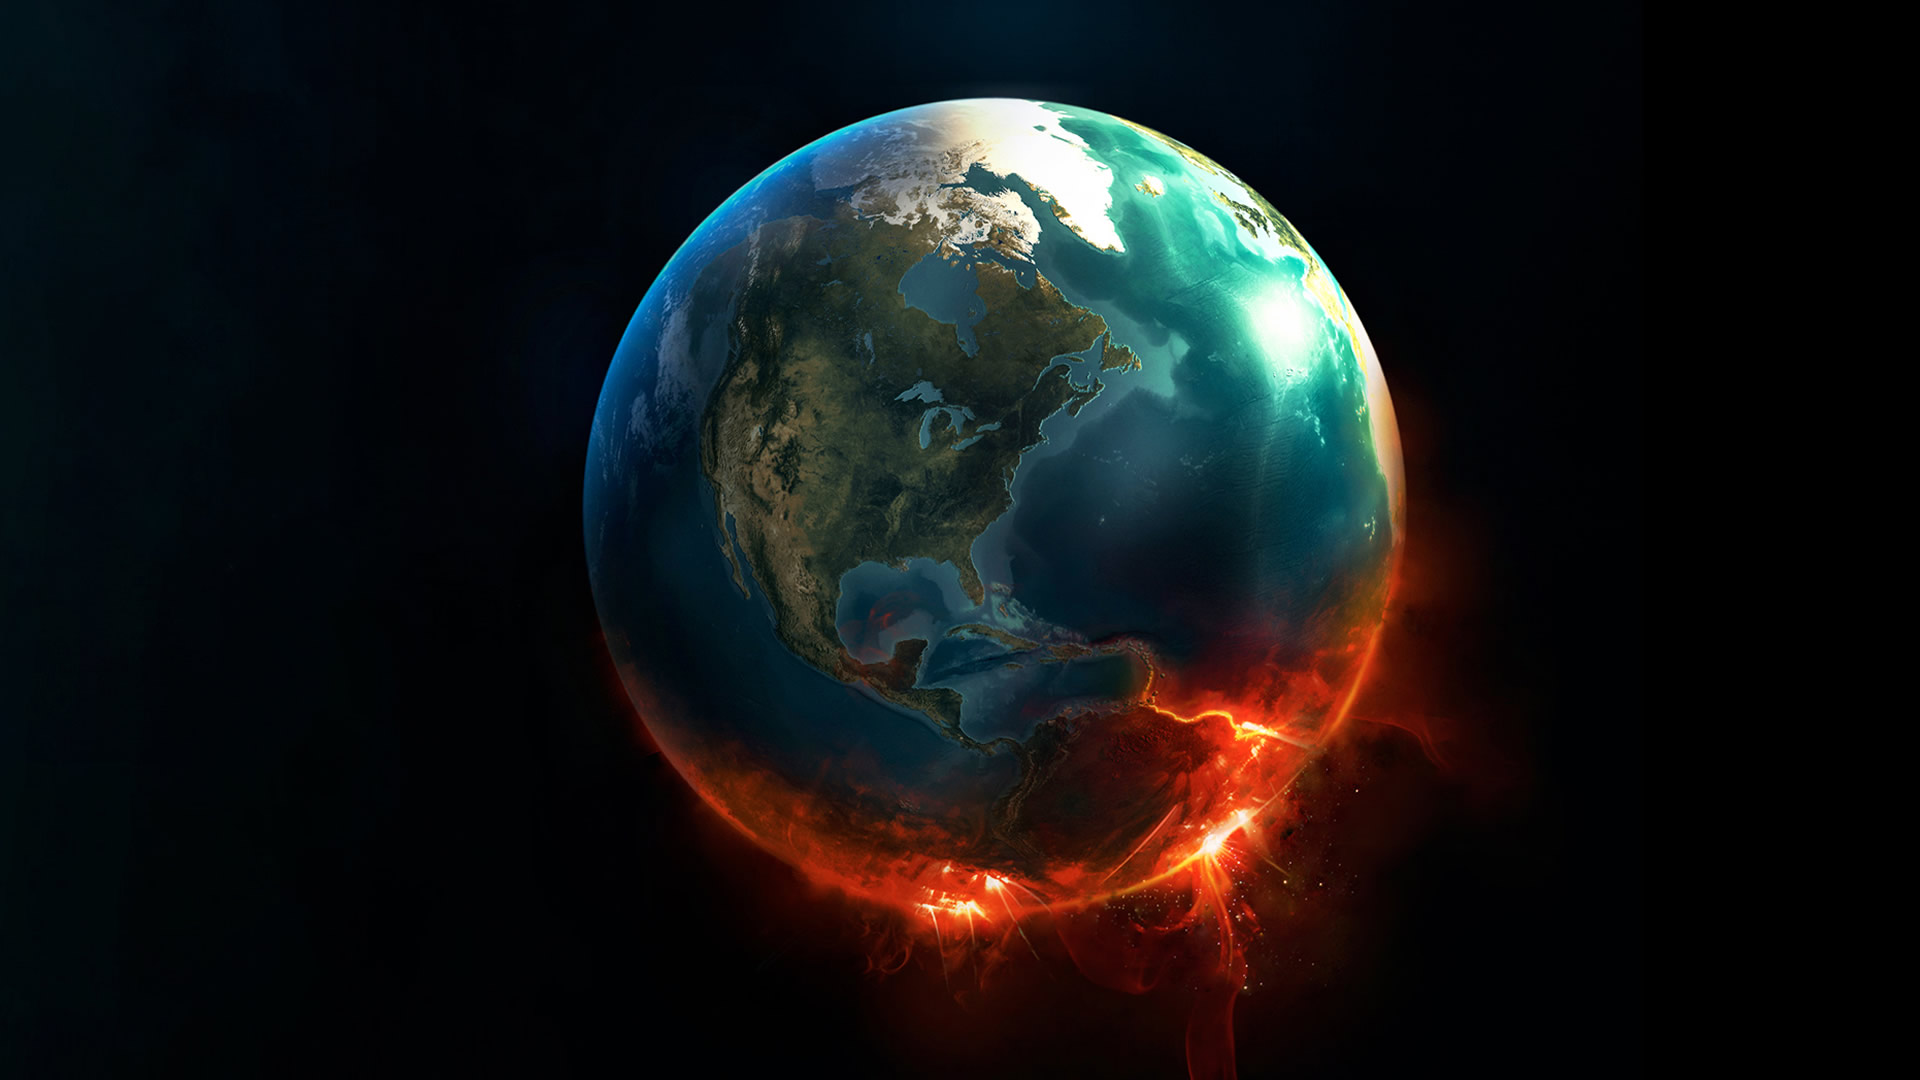 planets, Earth, apocalypse - desktop wallpaper